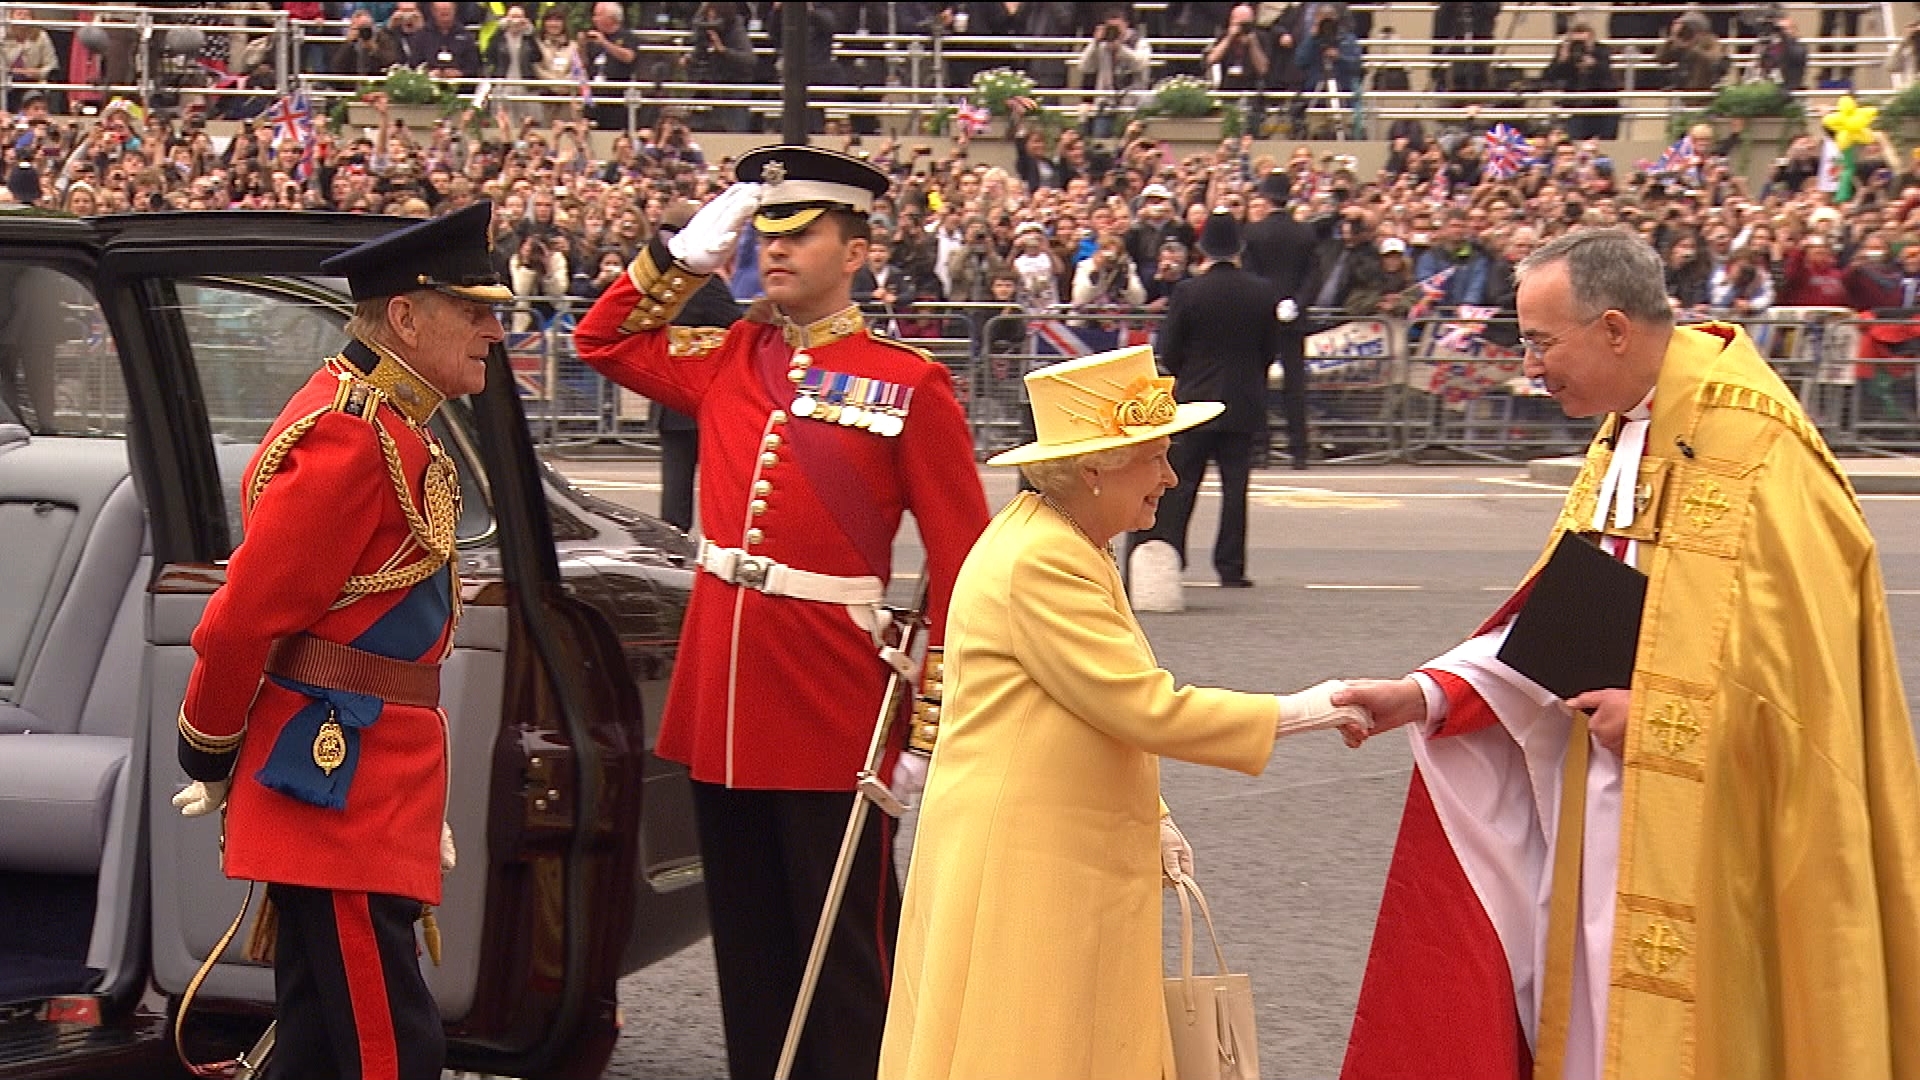 Prince Philip and Queen Elizabeth II in The Royal Wedding (2011)